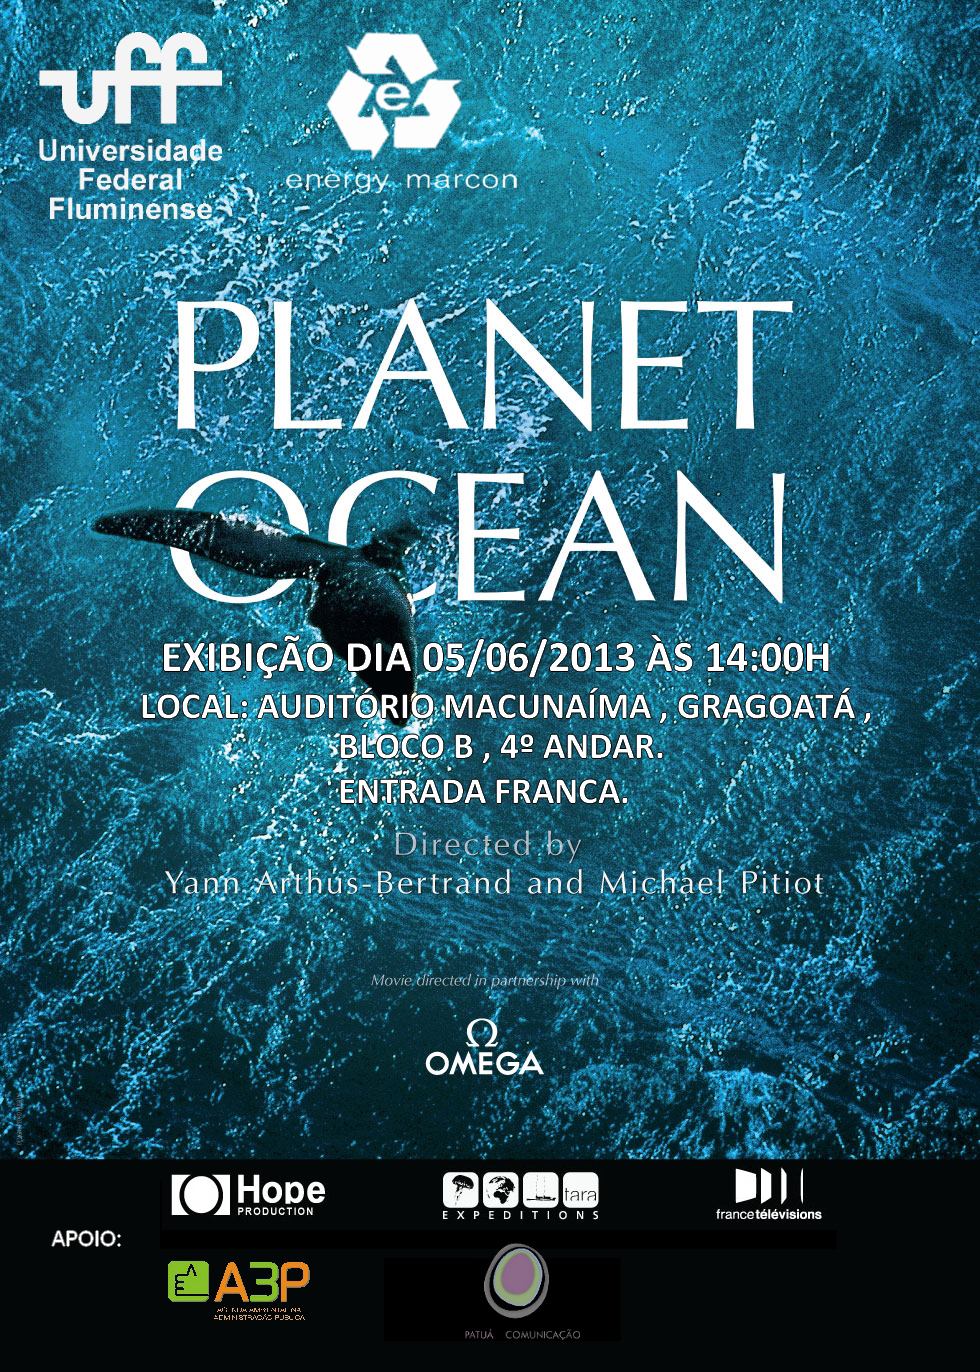 http://www.noticias.uff.br/noticias/2013/05/poster-Planet-Ocean.jpg